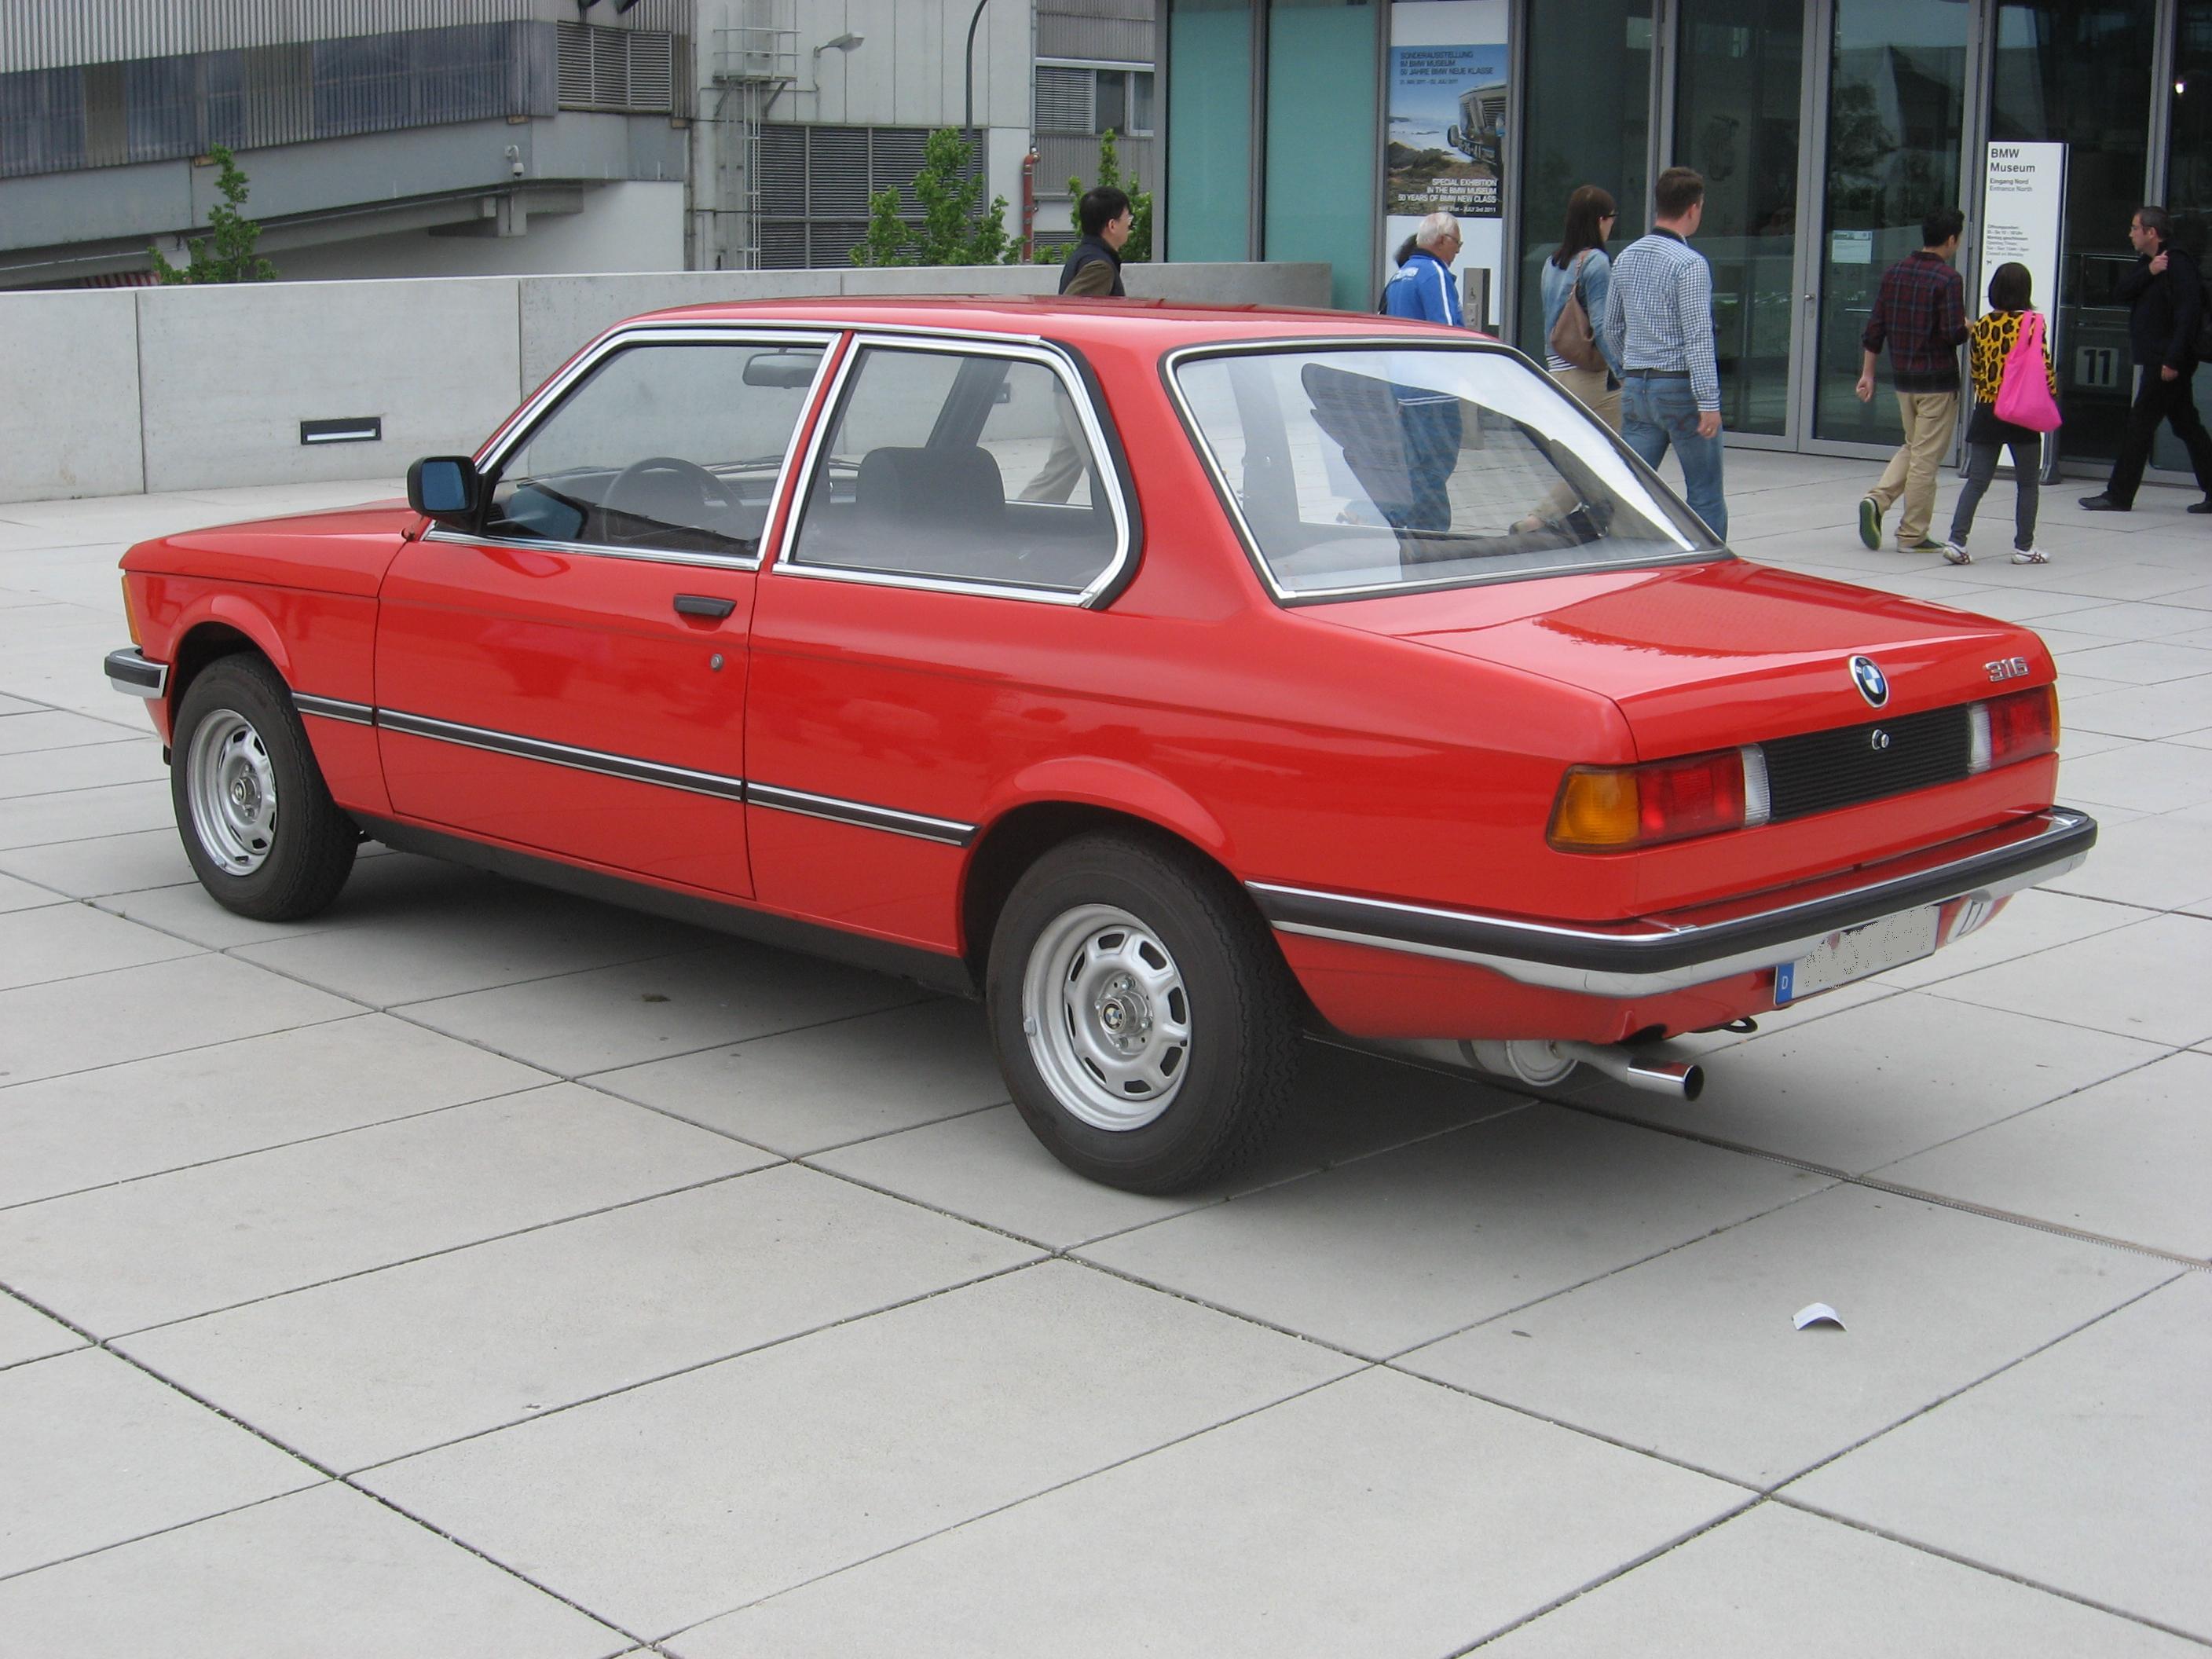 File:BMW 316.E21 Rear-view.JPG - Wikimedia Commons